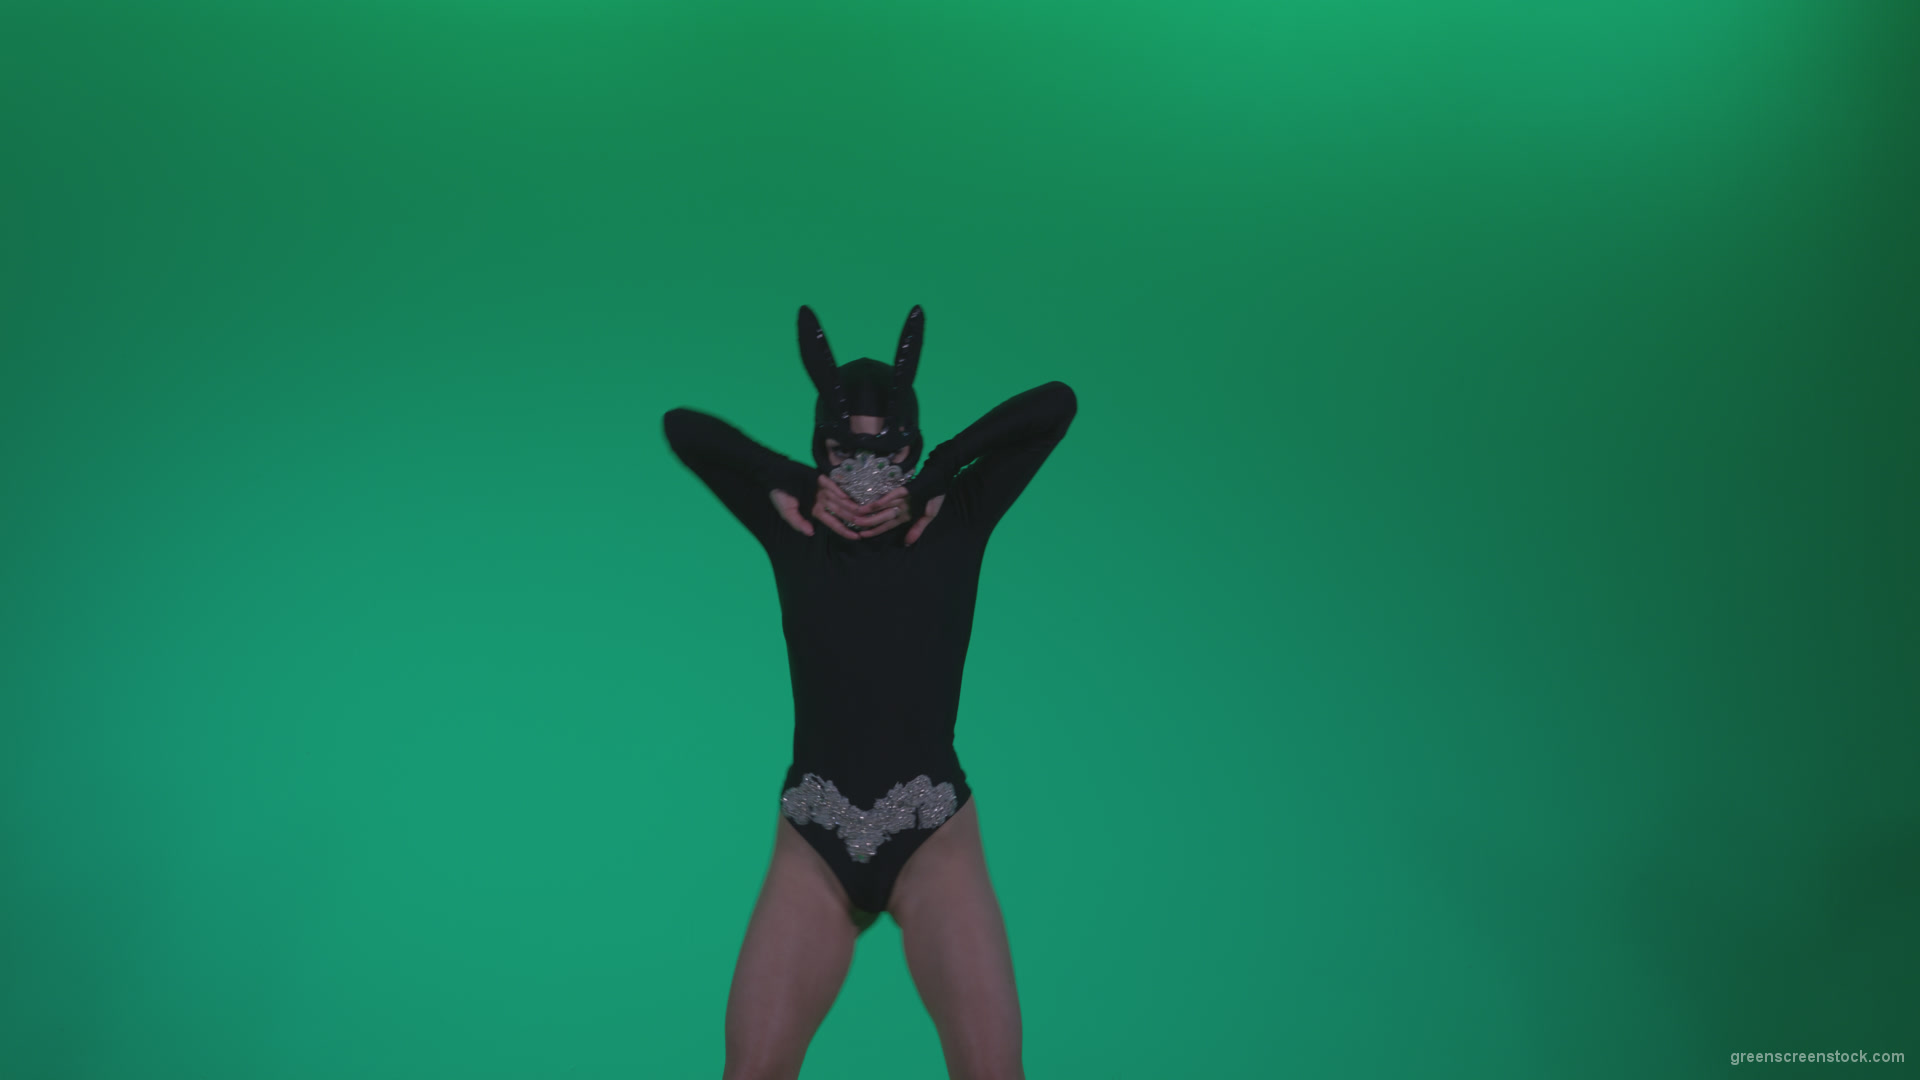 Go-go-Dancer-Black-Rabbit-u13-Green-Screen-Video-Footage_008 Green Screen Stock